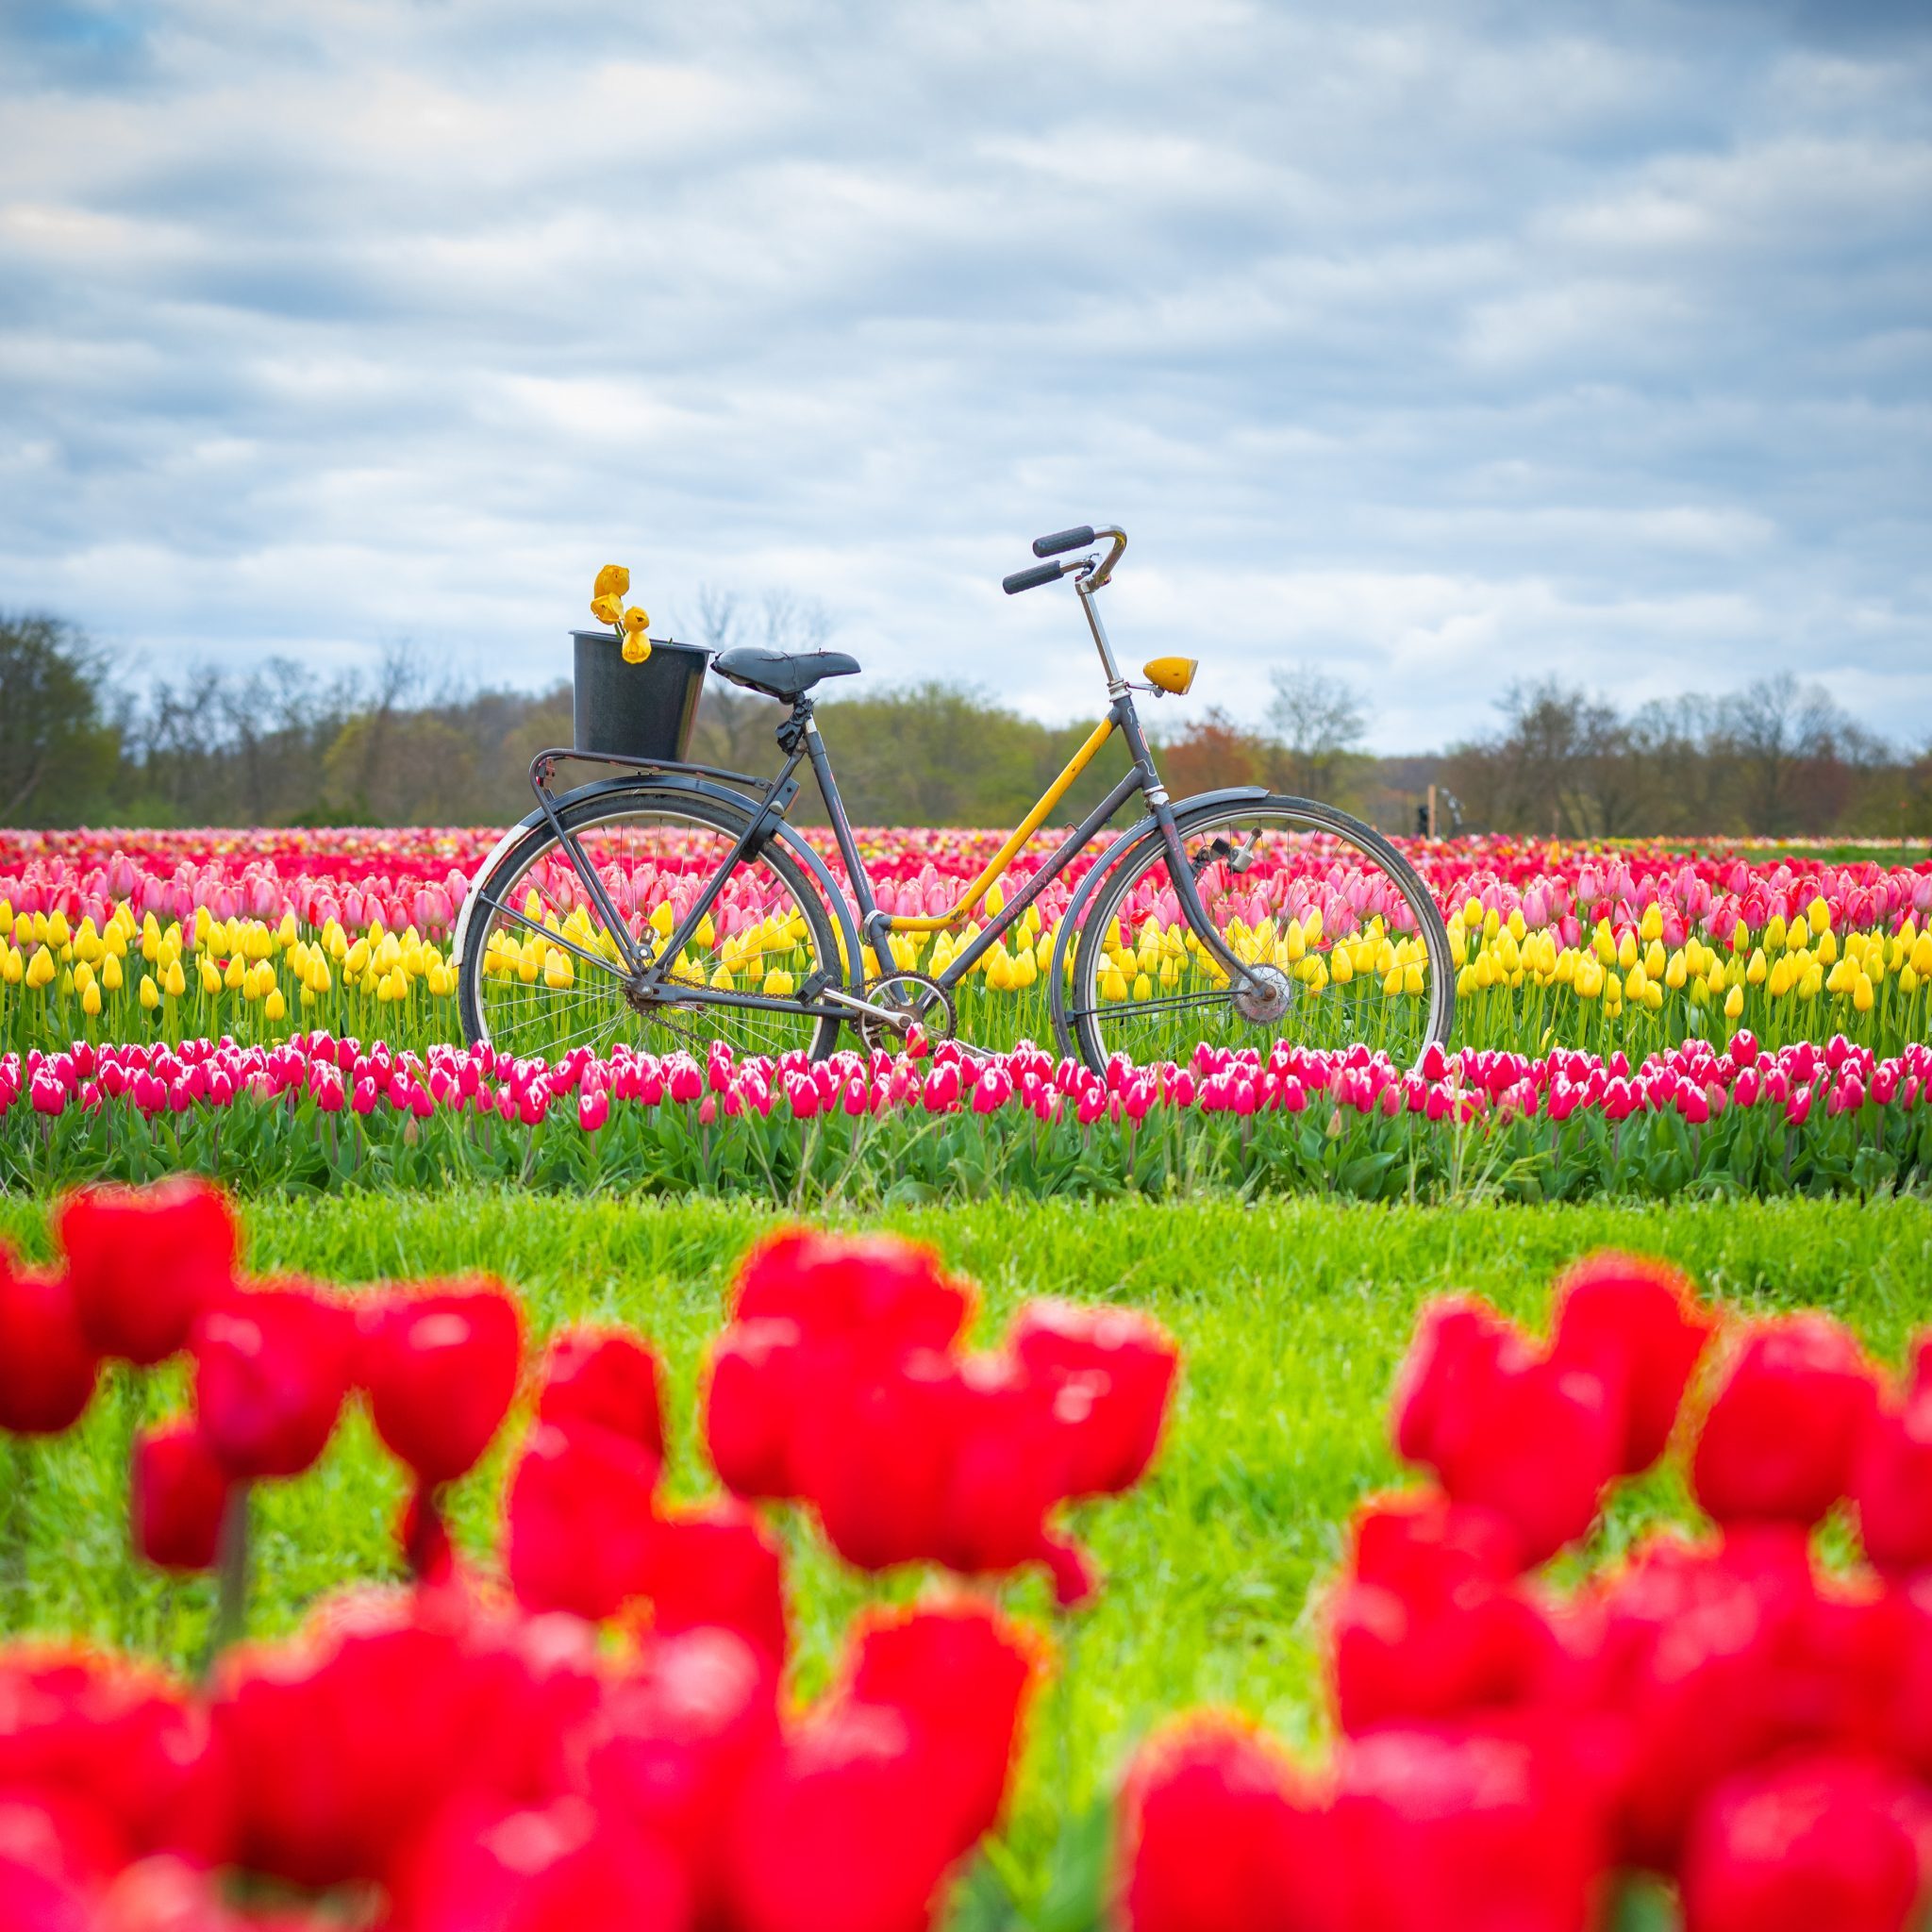 Holland Ridge Farms: U-Pick Tulips opens April 13th!